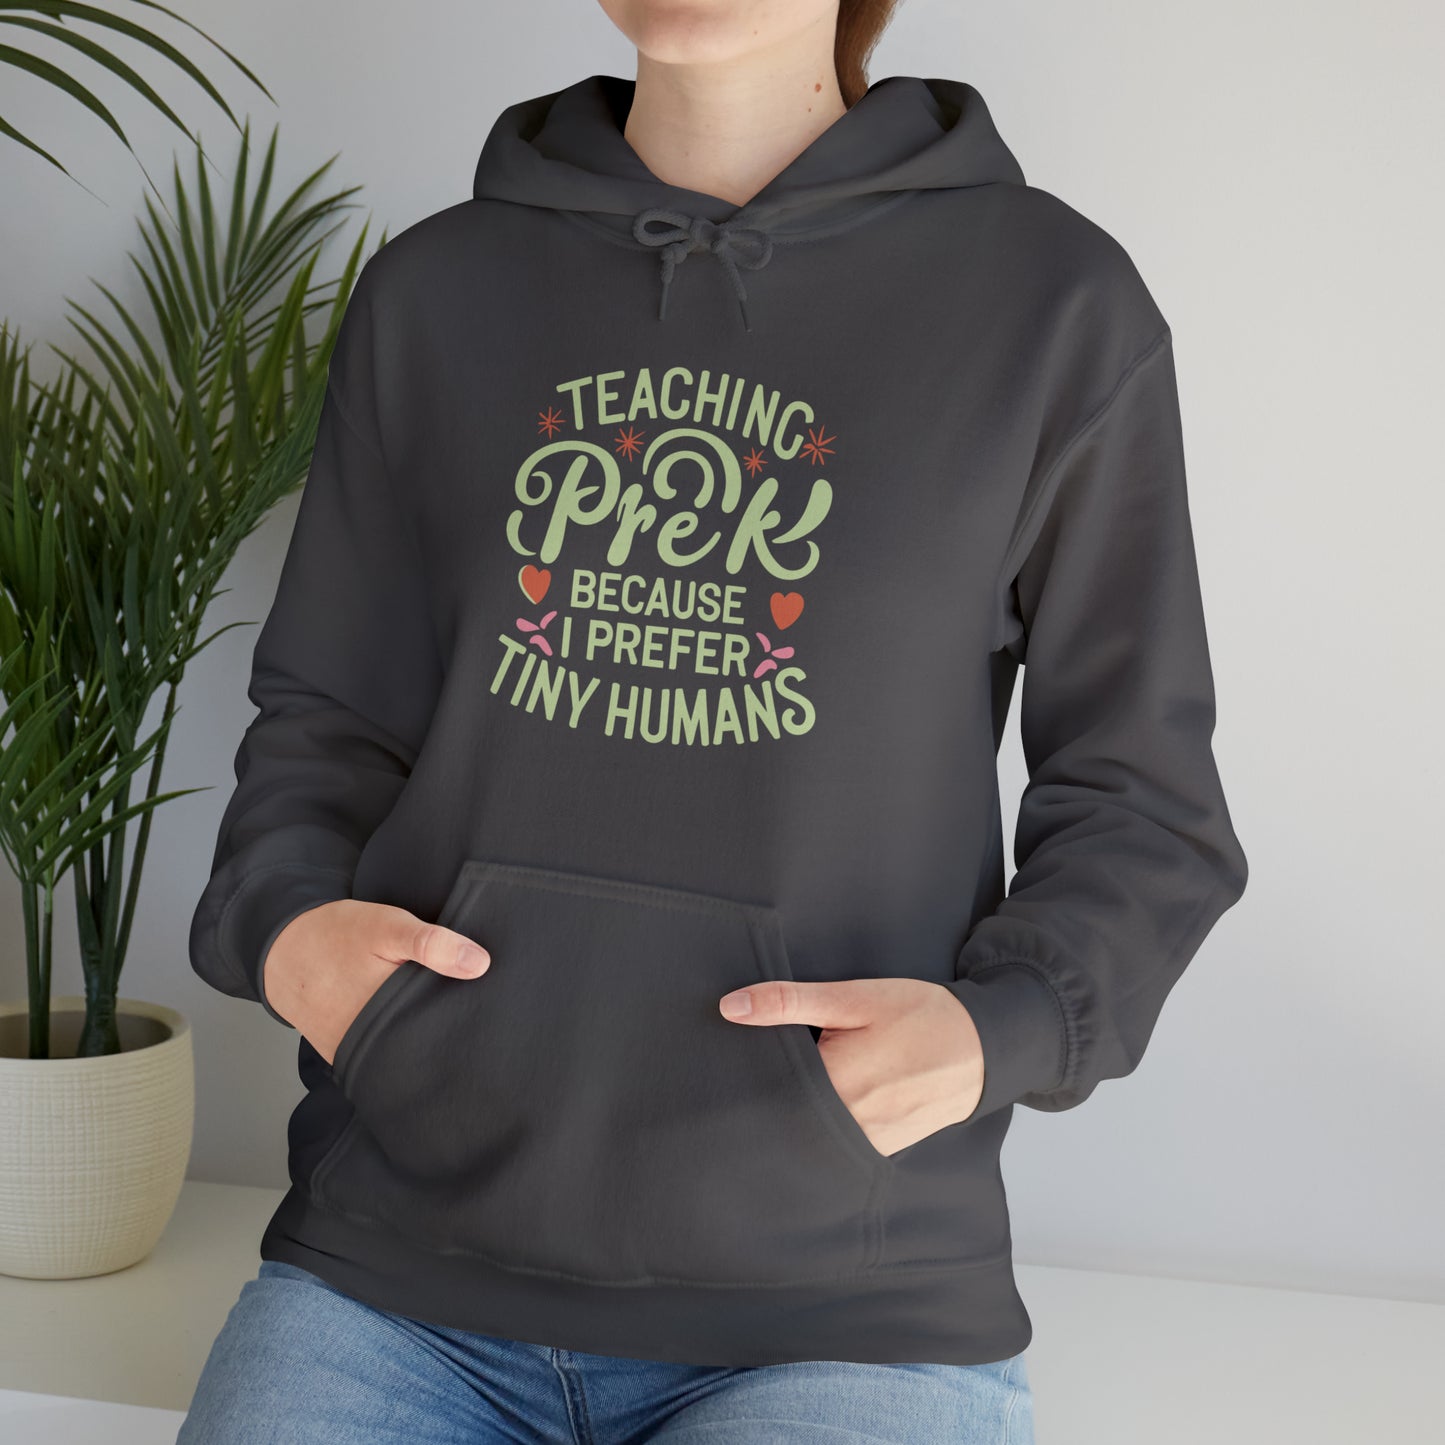 PreK Teacher Hoodie - "Teaching Preschool Because I Prefer Tiny Humans"